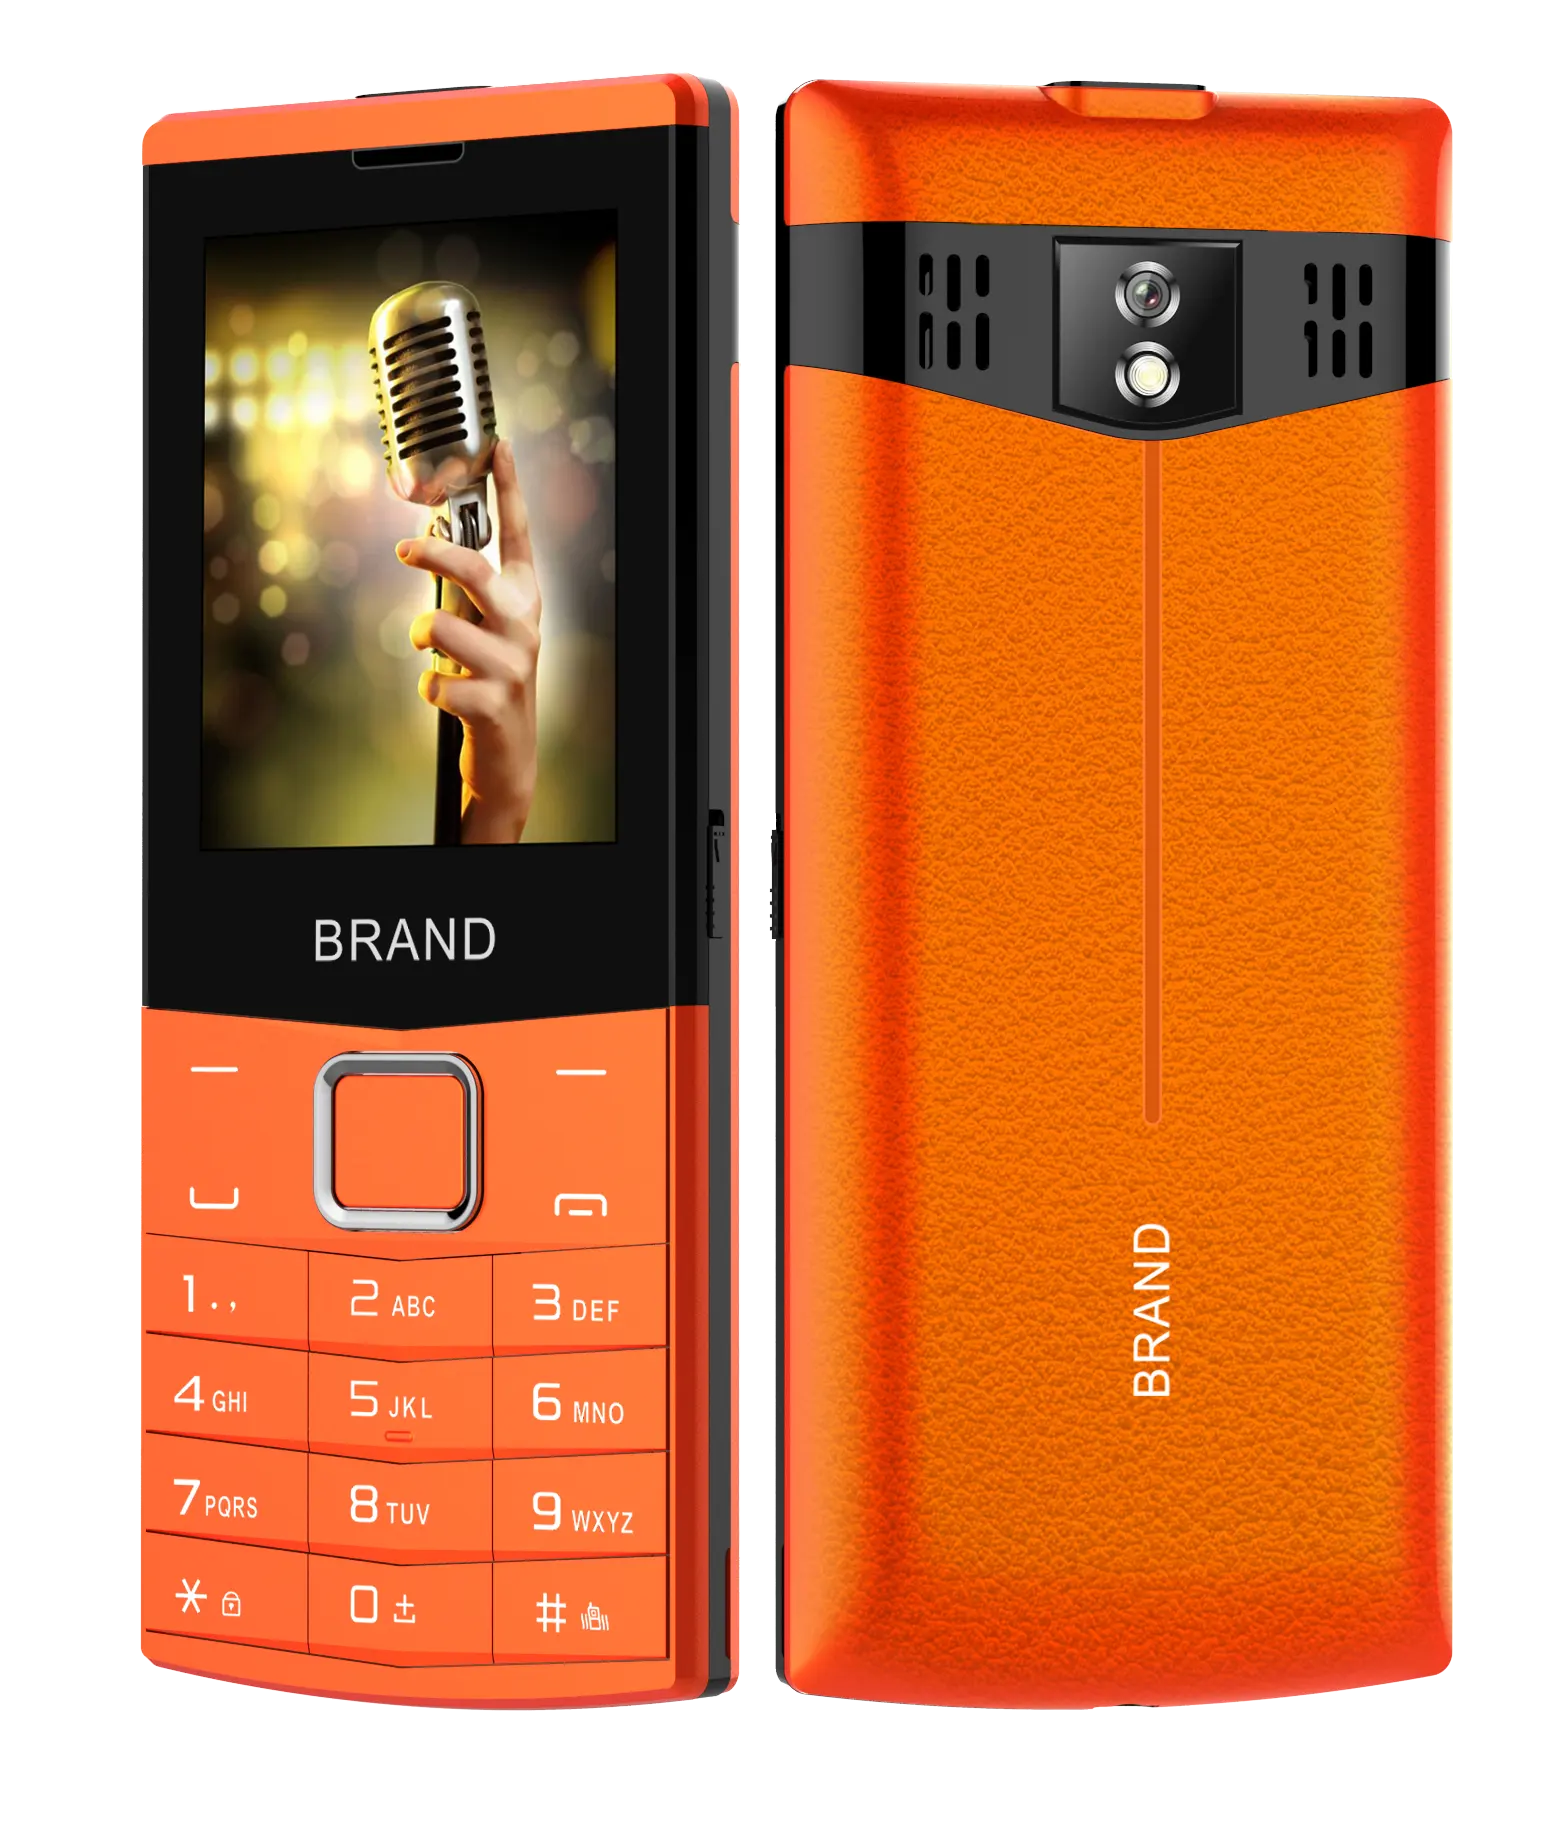 100% Unlocked wholesale Bar Phone for Nokia 3110 classic Mobile Phone refurbished